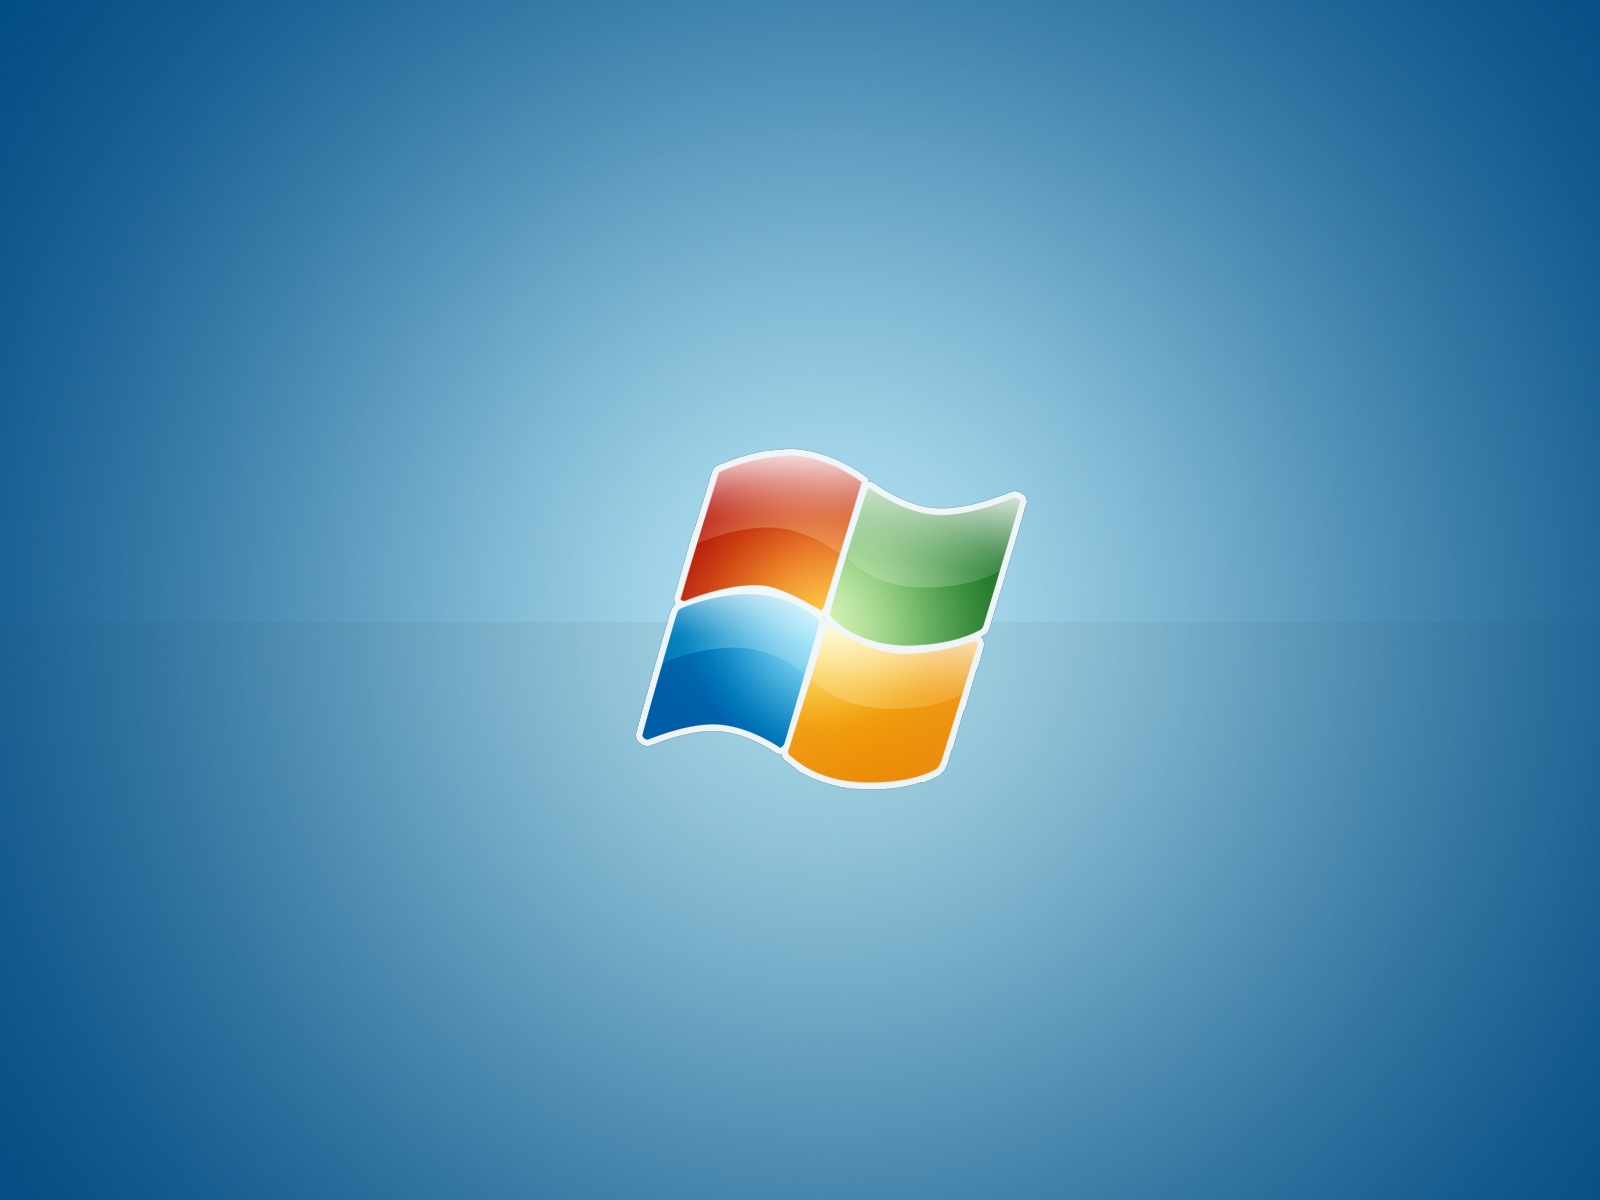 Windows Xp Logo Wallpapers